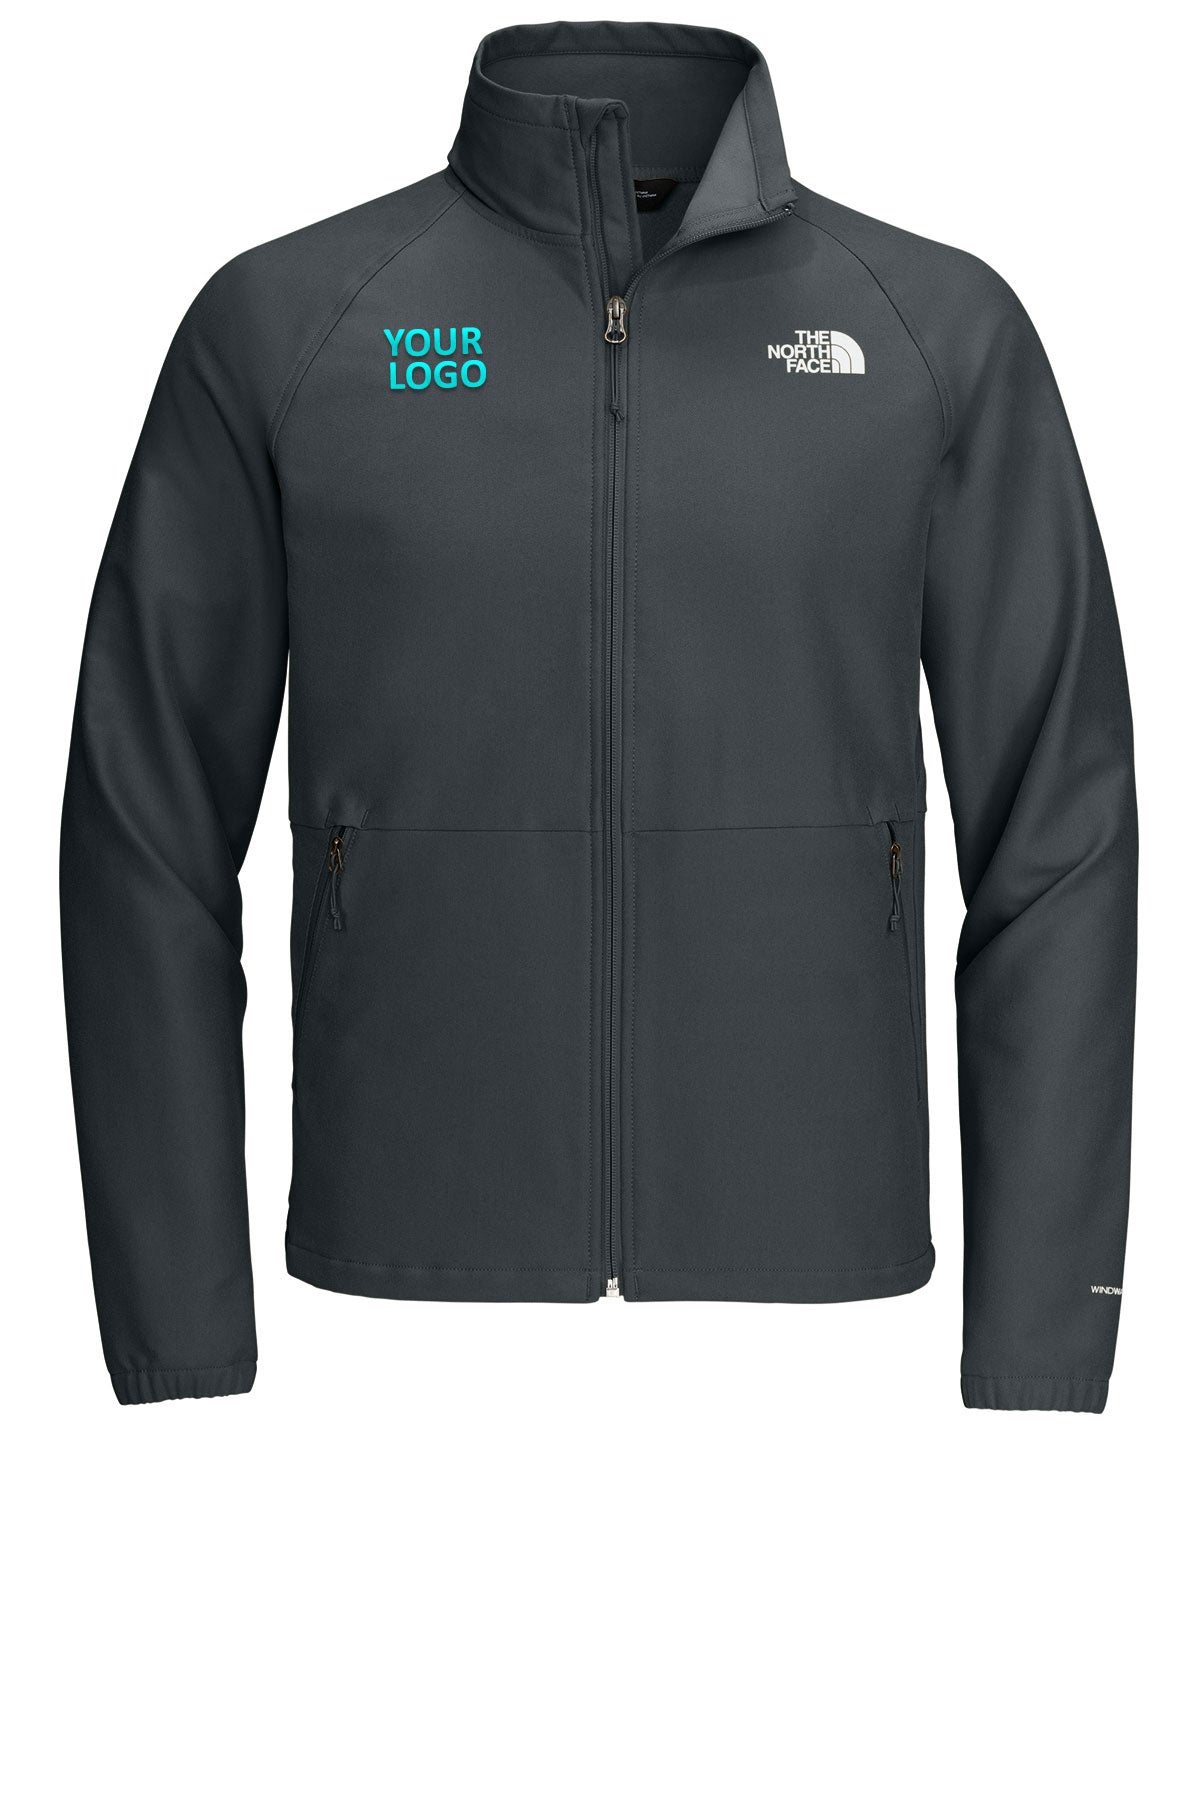 The North Face Asphalt Grey Dark Heather NF0A8BUD custom logo jackets